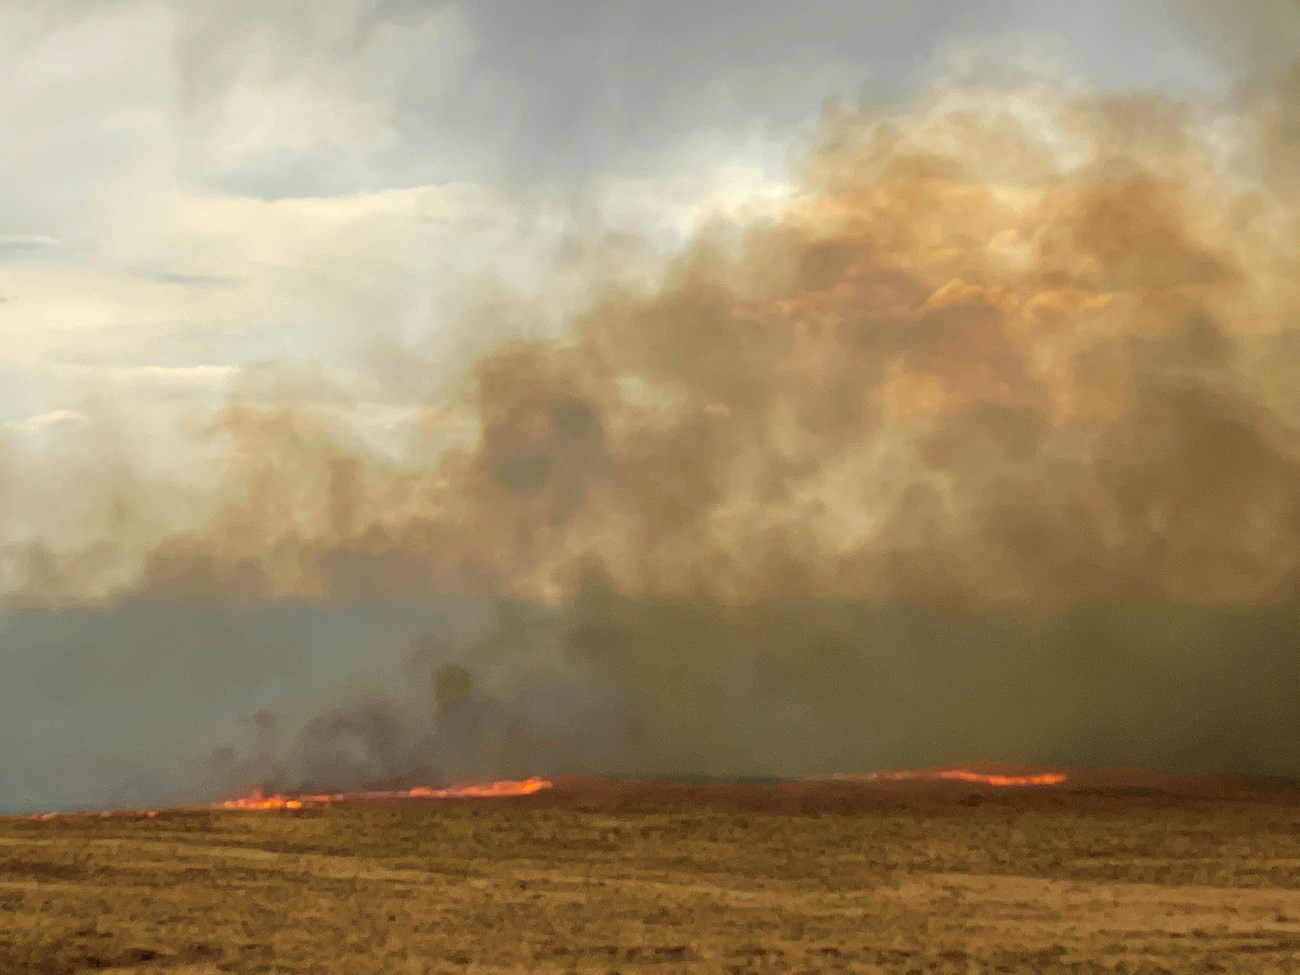 A line of wildfire burns through grasslands southwest of the dunes